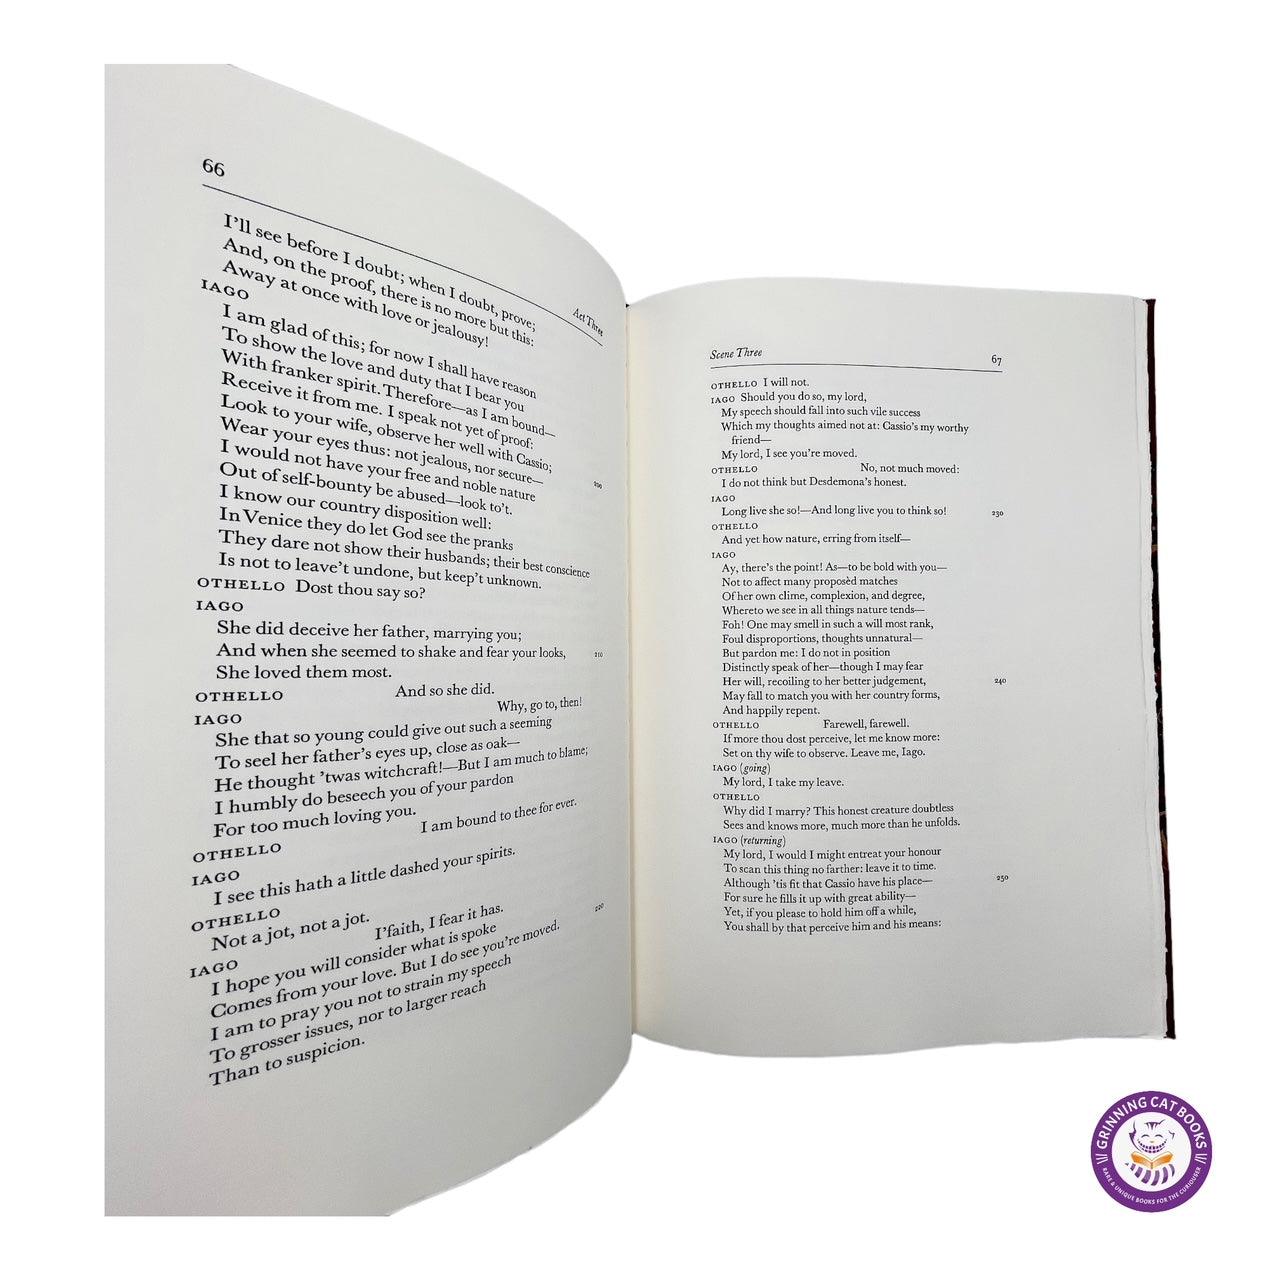 Shakespeare: Othello ("Letterpress Shakespeare" Deluxe Limited Edition) - Grinning Cat Books - Books - DRAMA, SHAKESPEARE